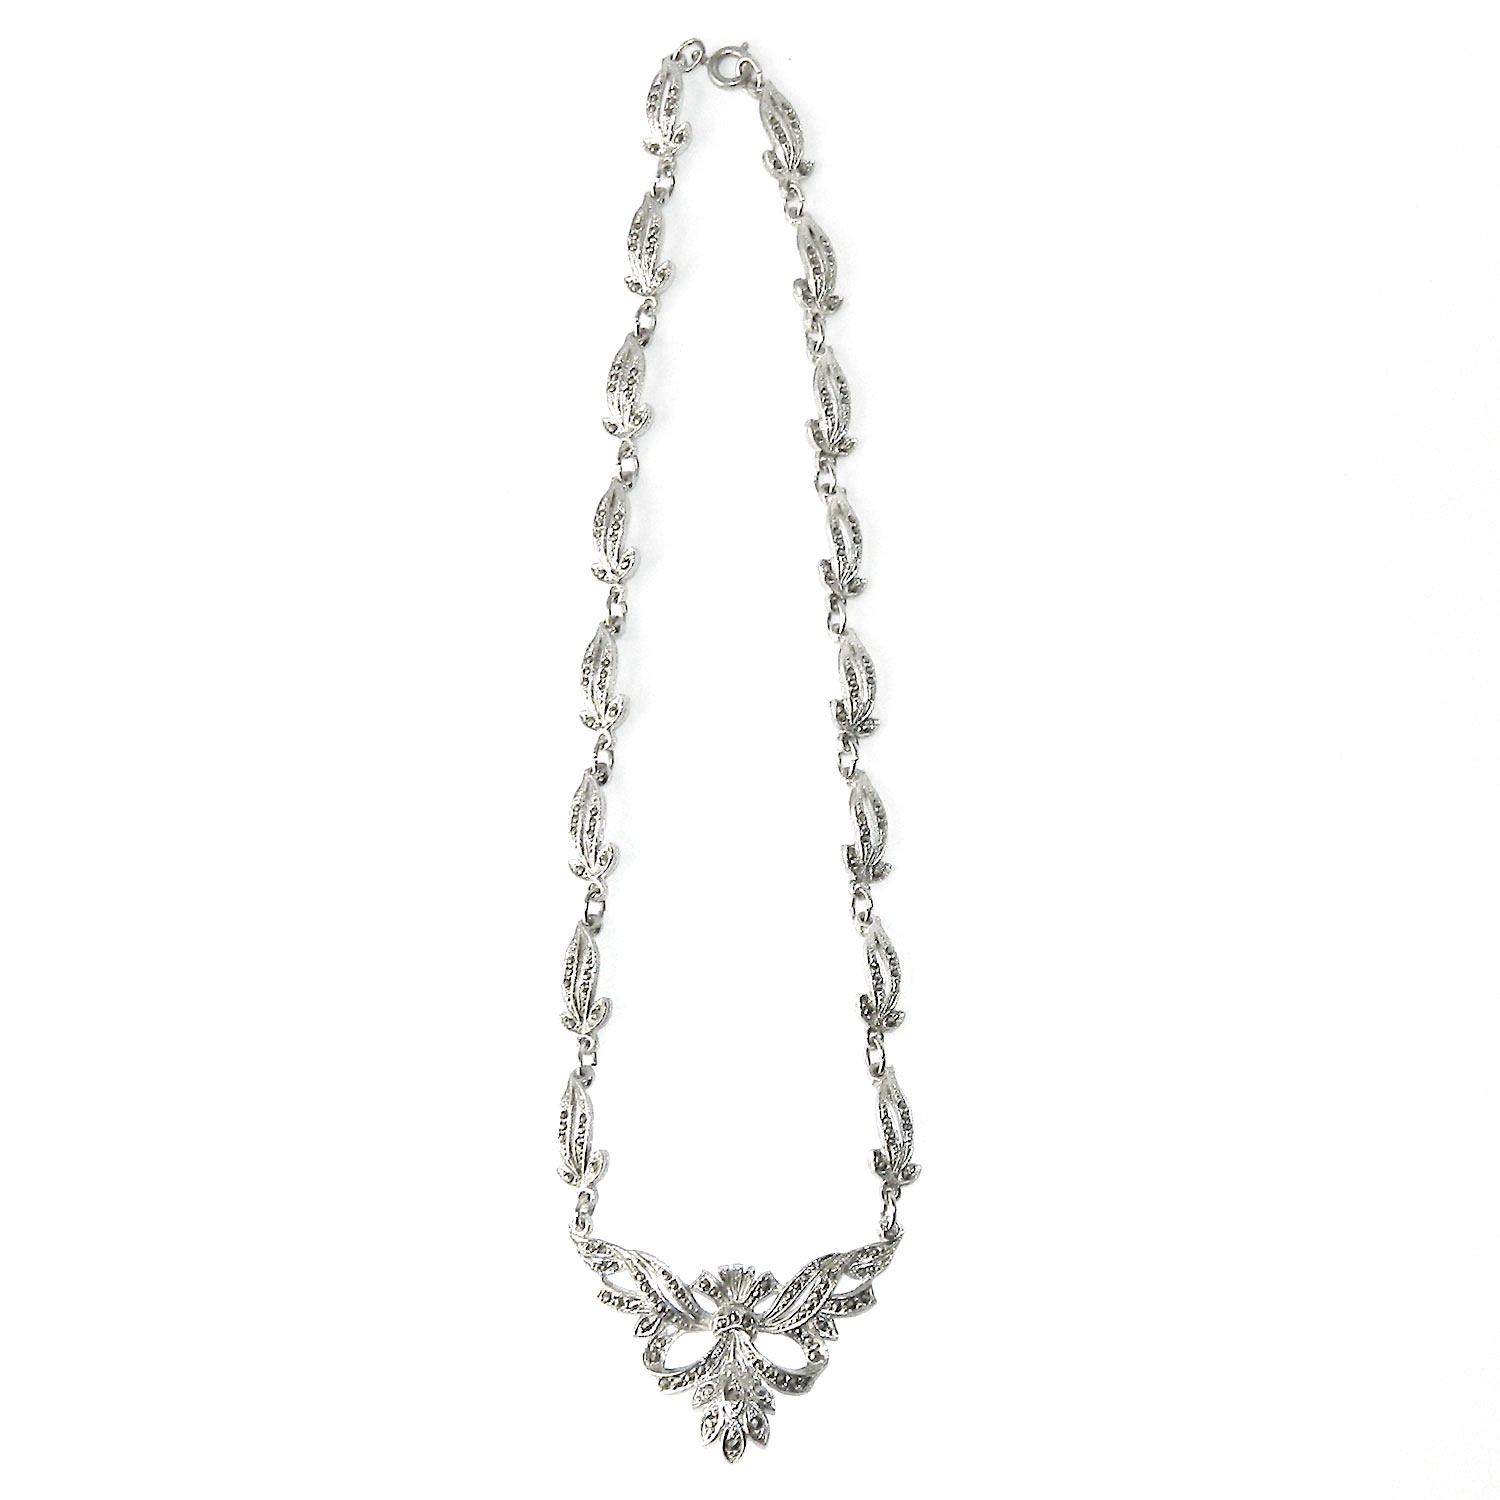 1940s marcasite necklace